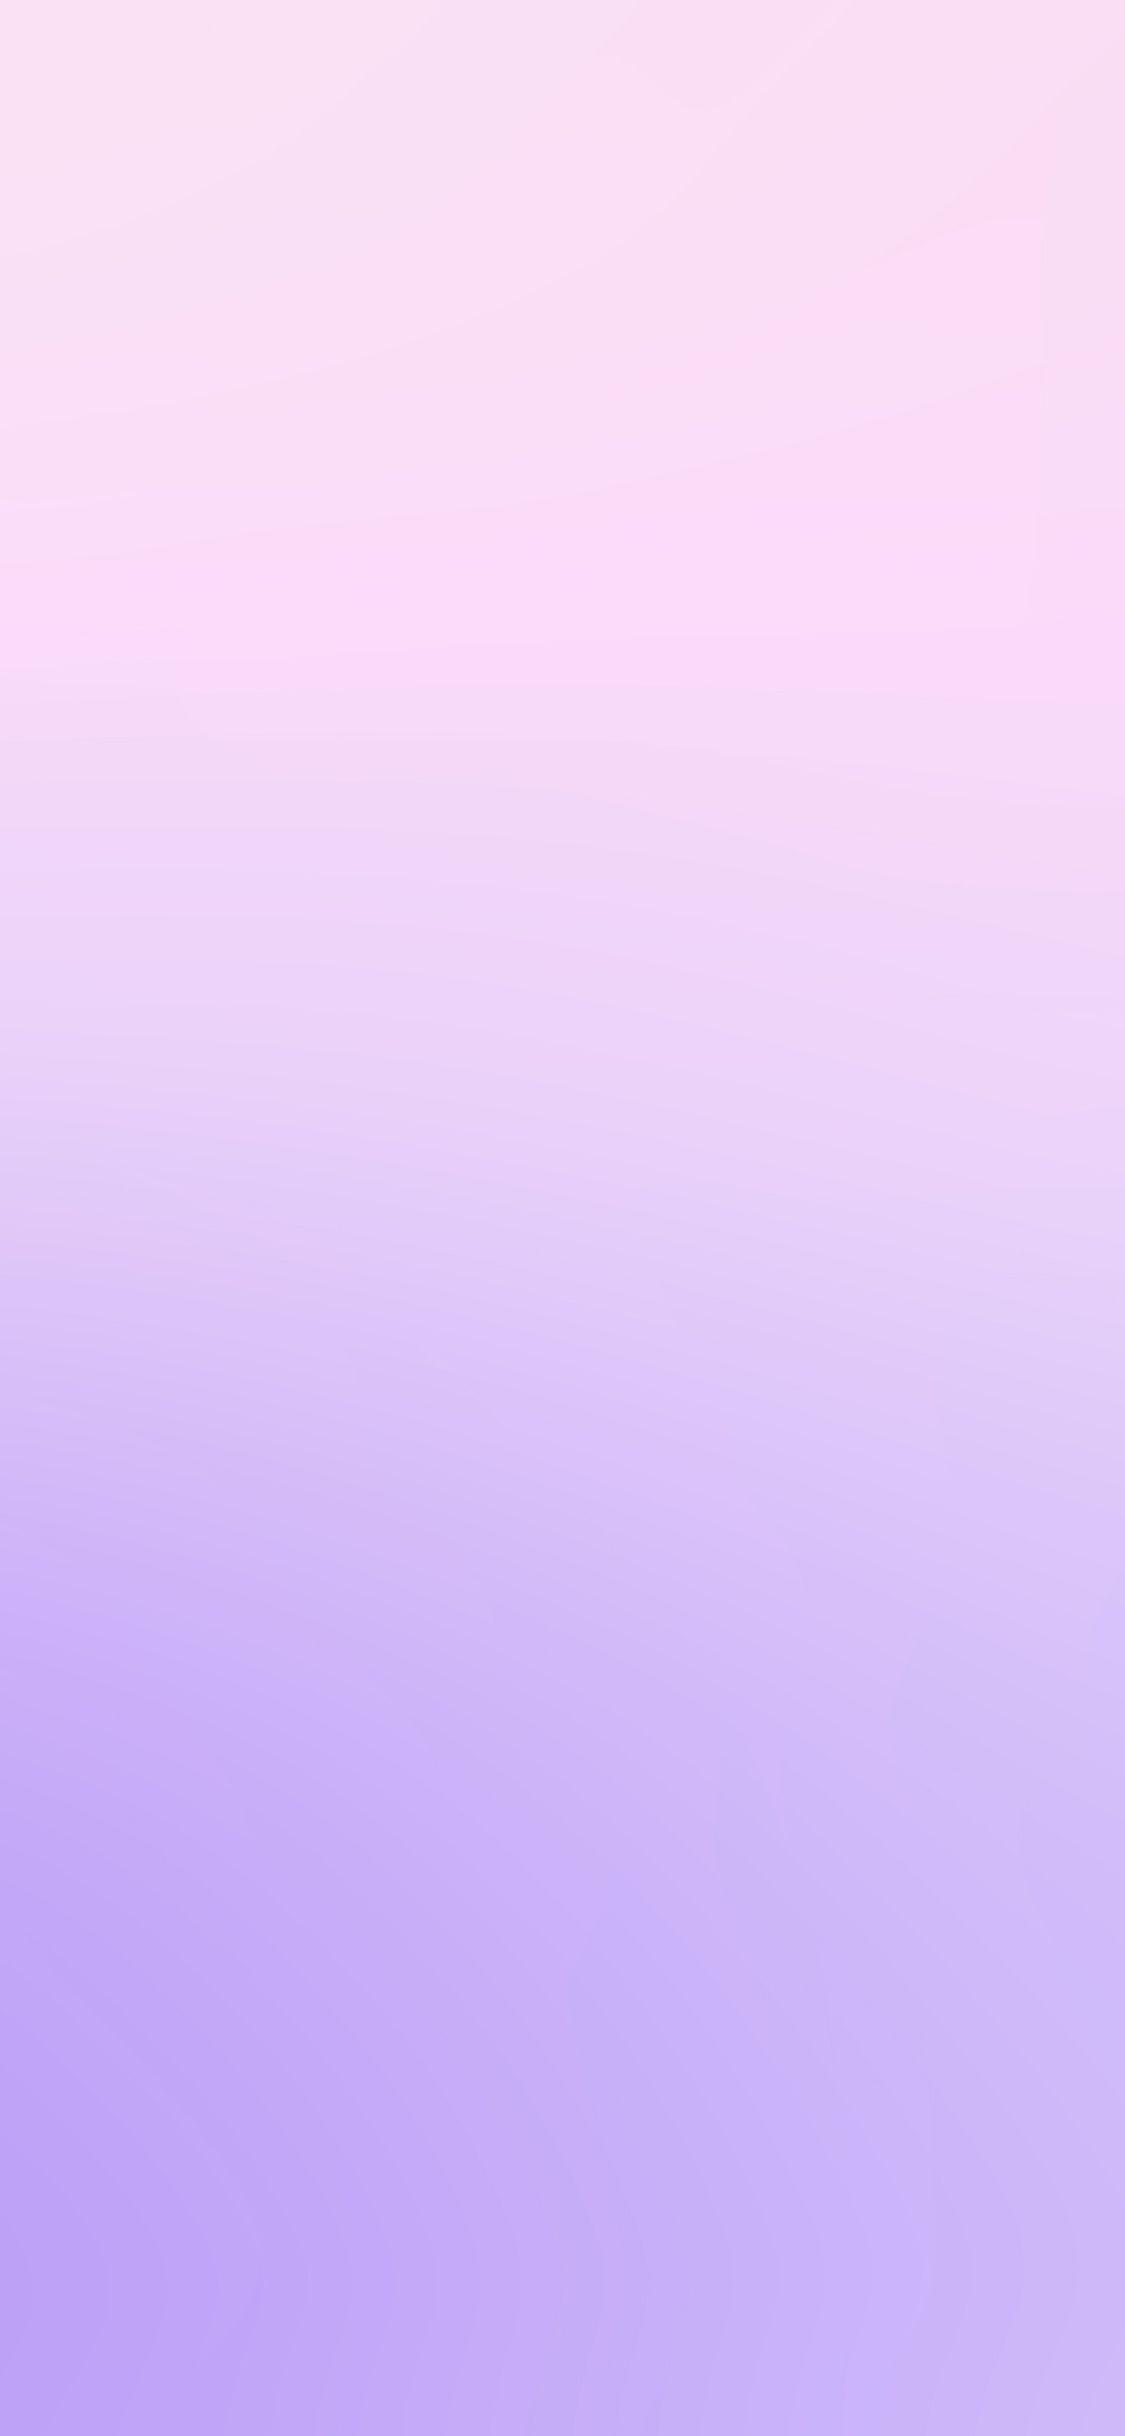 iPhone X wallpaper. cute purple blur gradation